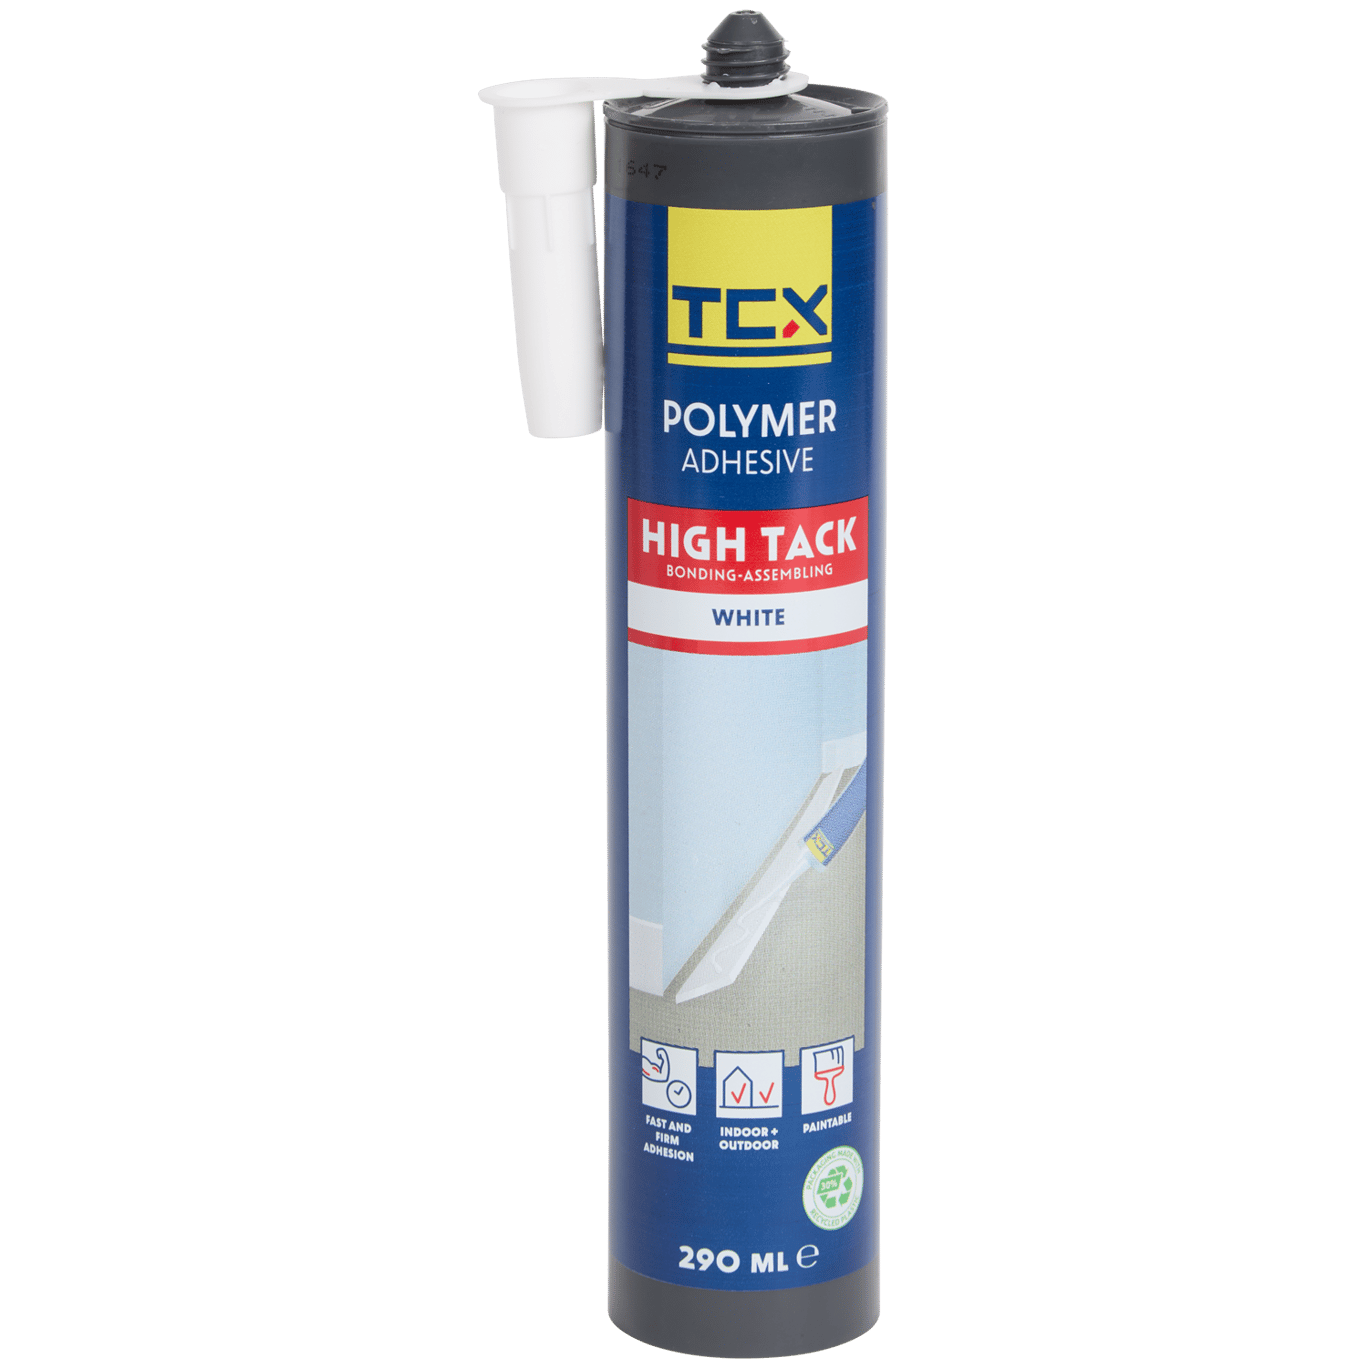 Adhesivo de polímero TCX High Tack blanco